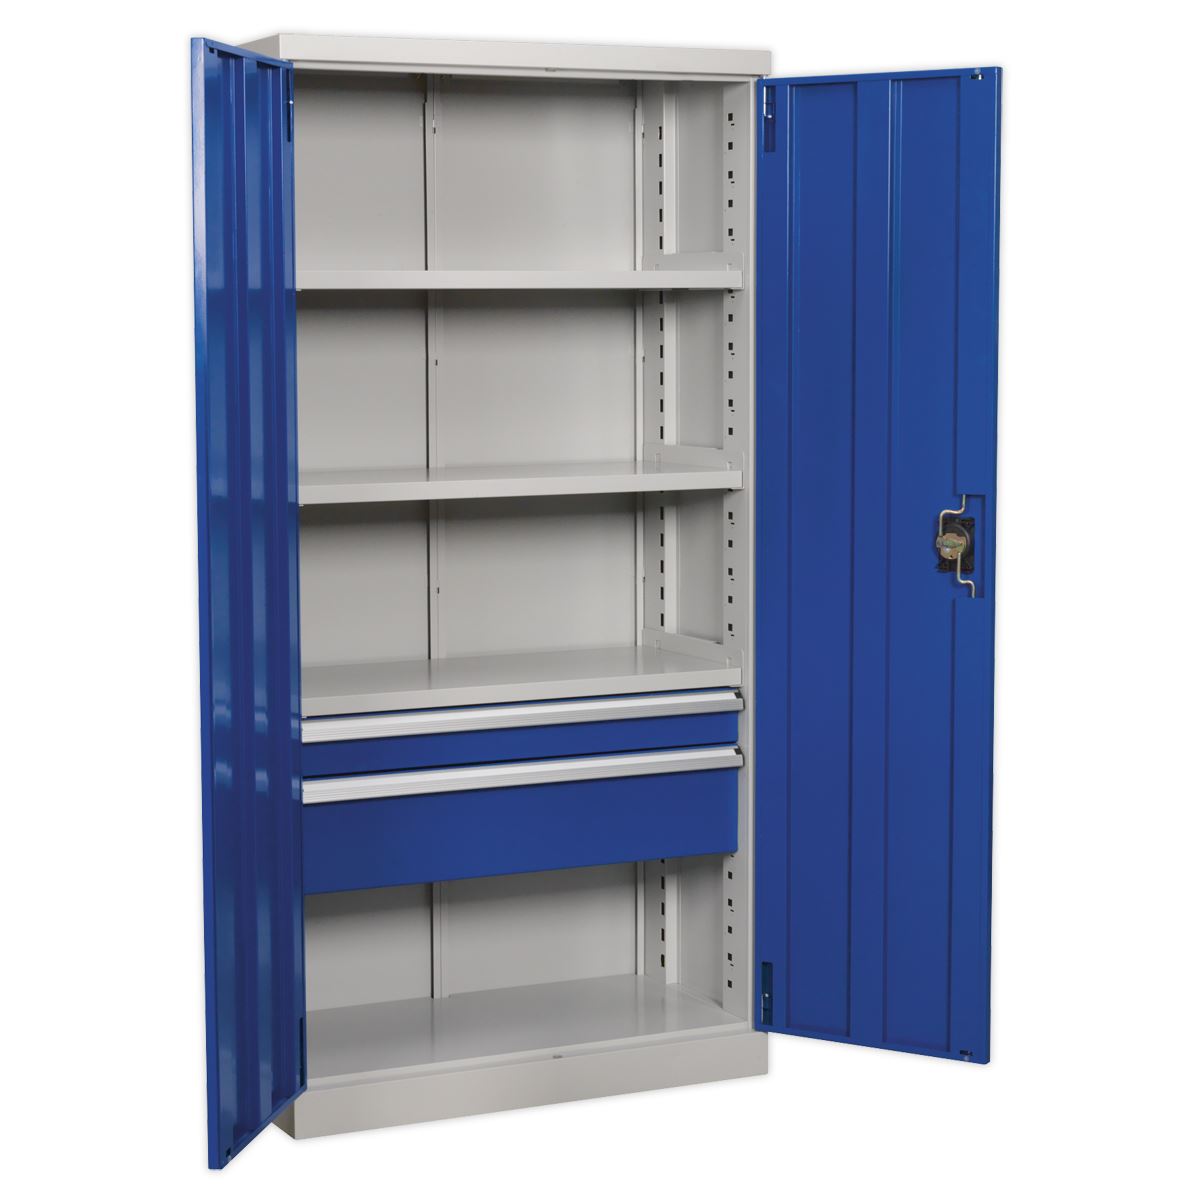 Sealey Premier Industrial Industrial Cabinet 2 Drawer 3 Shelf 1800mm